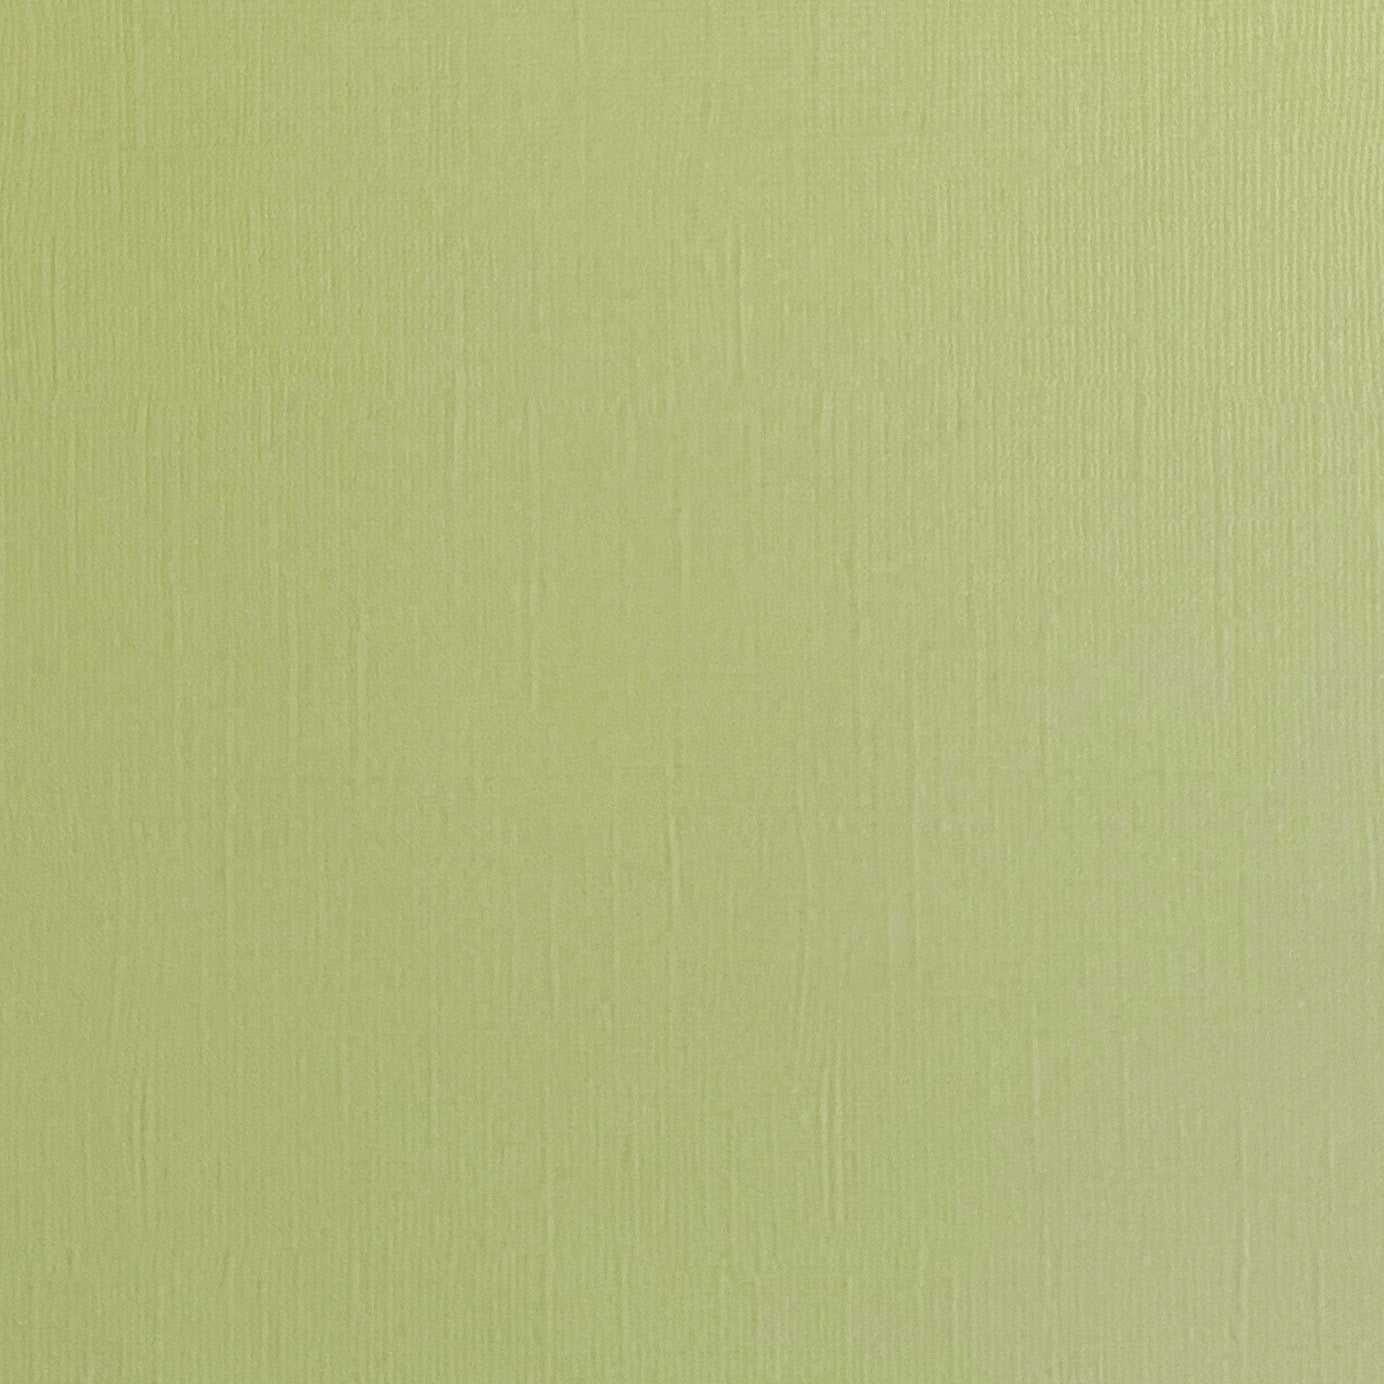 TEA GREEN - Textured Pale Green 12x12 Cardstock - Encore Paper